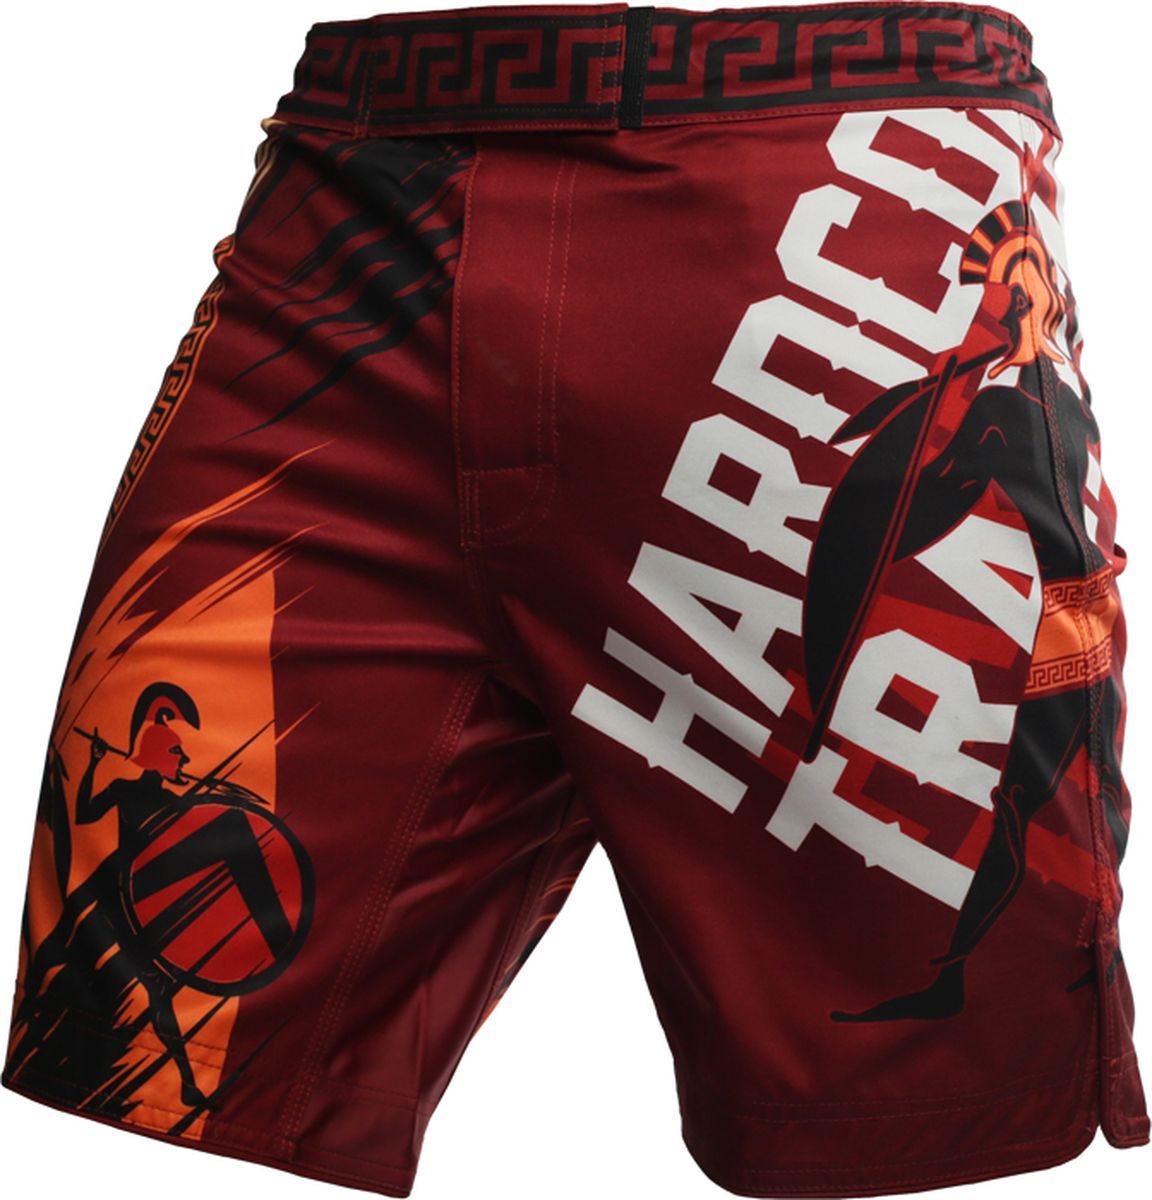   Hardcore Training Sparta Red, : . hctshorts065.  XL (52)